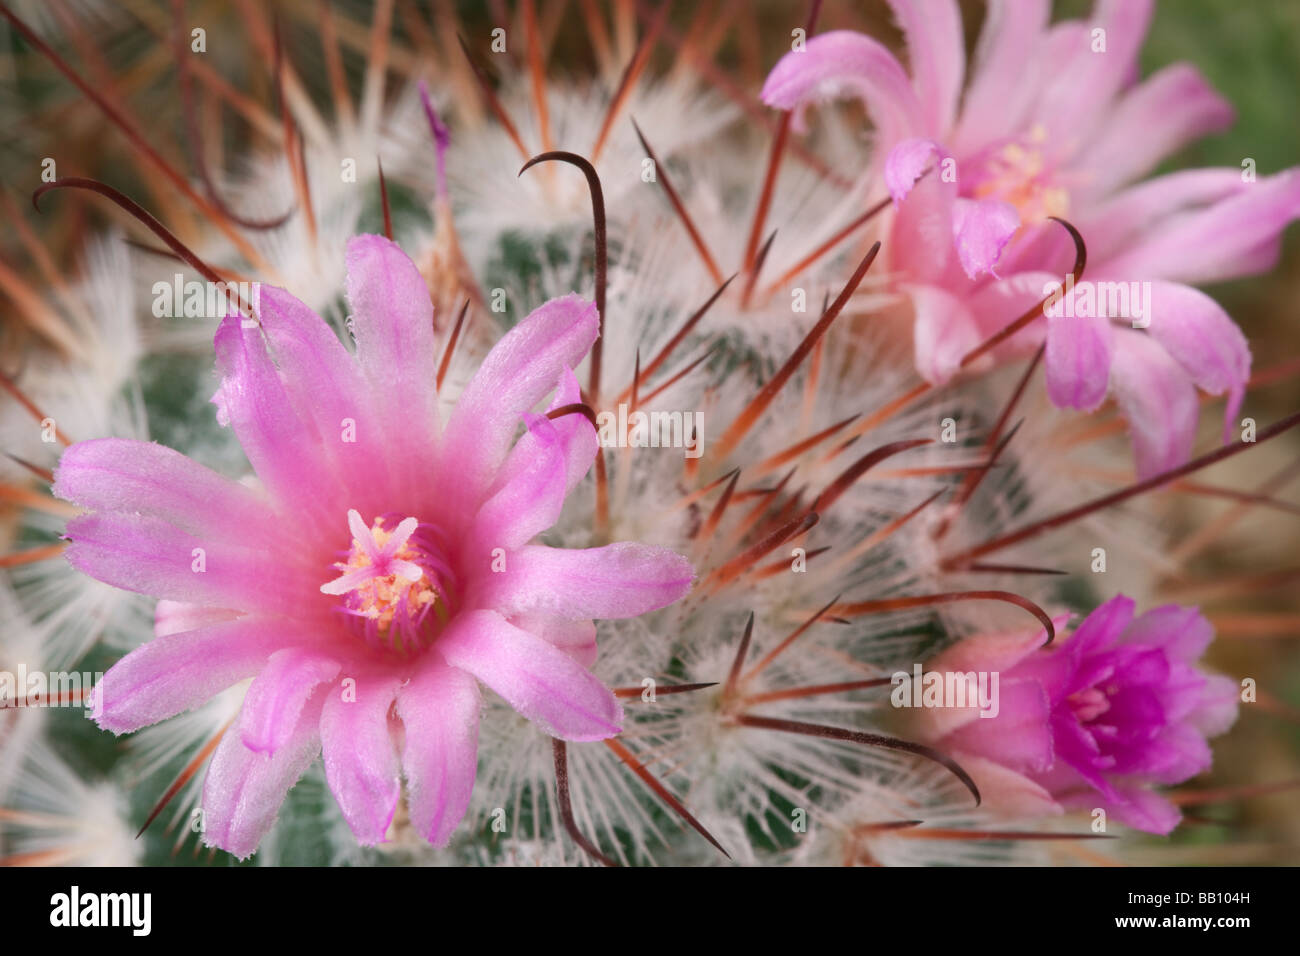 Mammillaria bombycina cactus flowers in close up Stock Photo